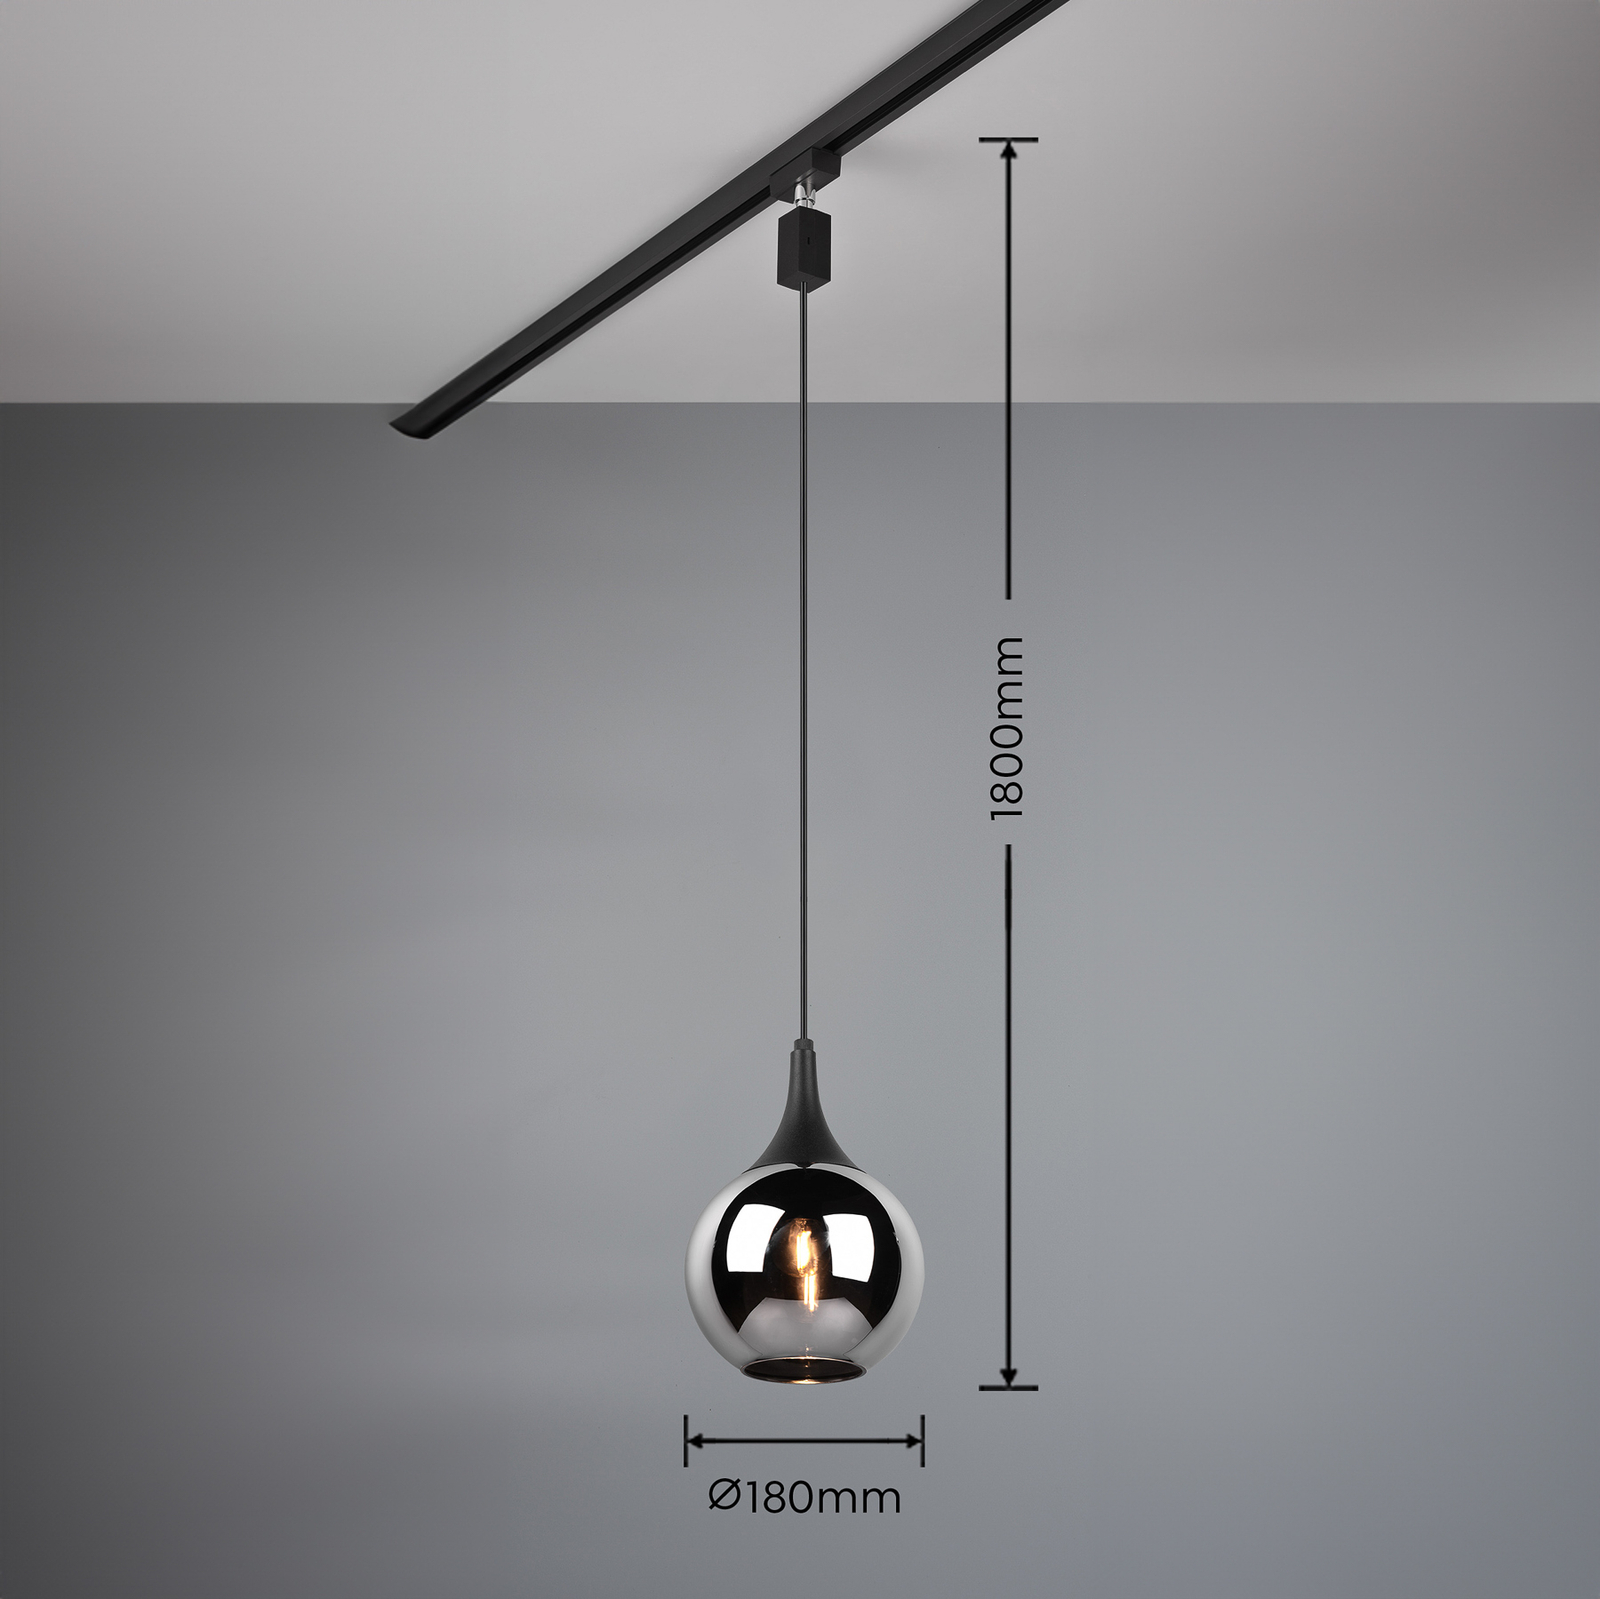 Hanglamp Lumina voor DUOline railsysteem